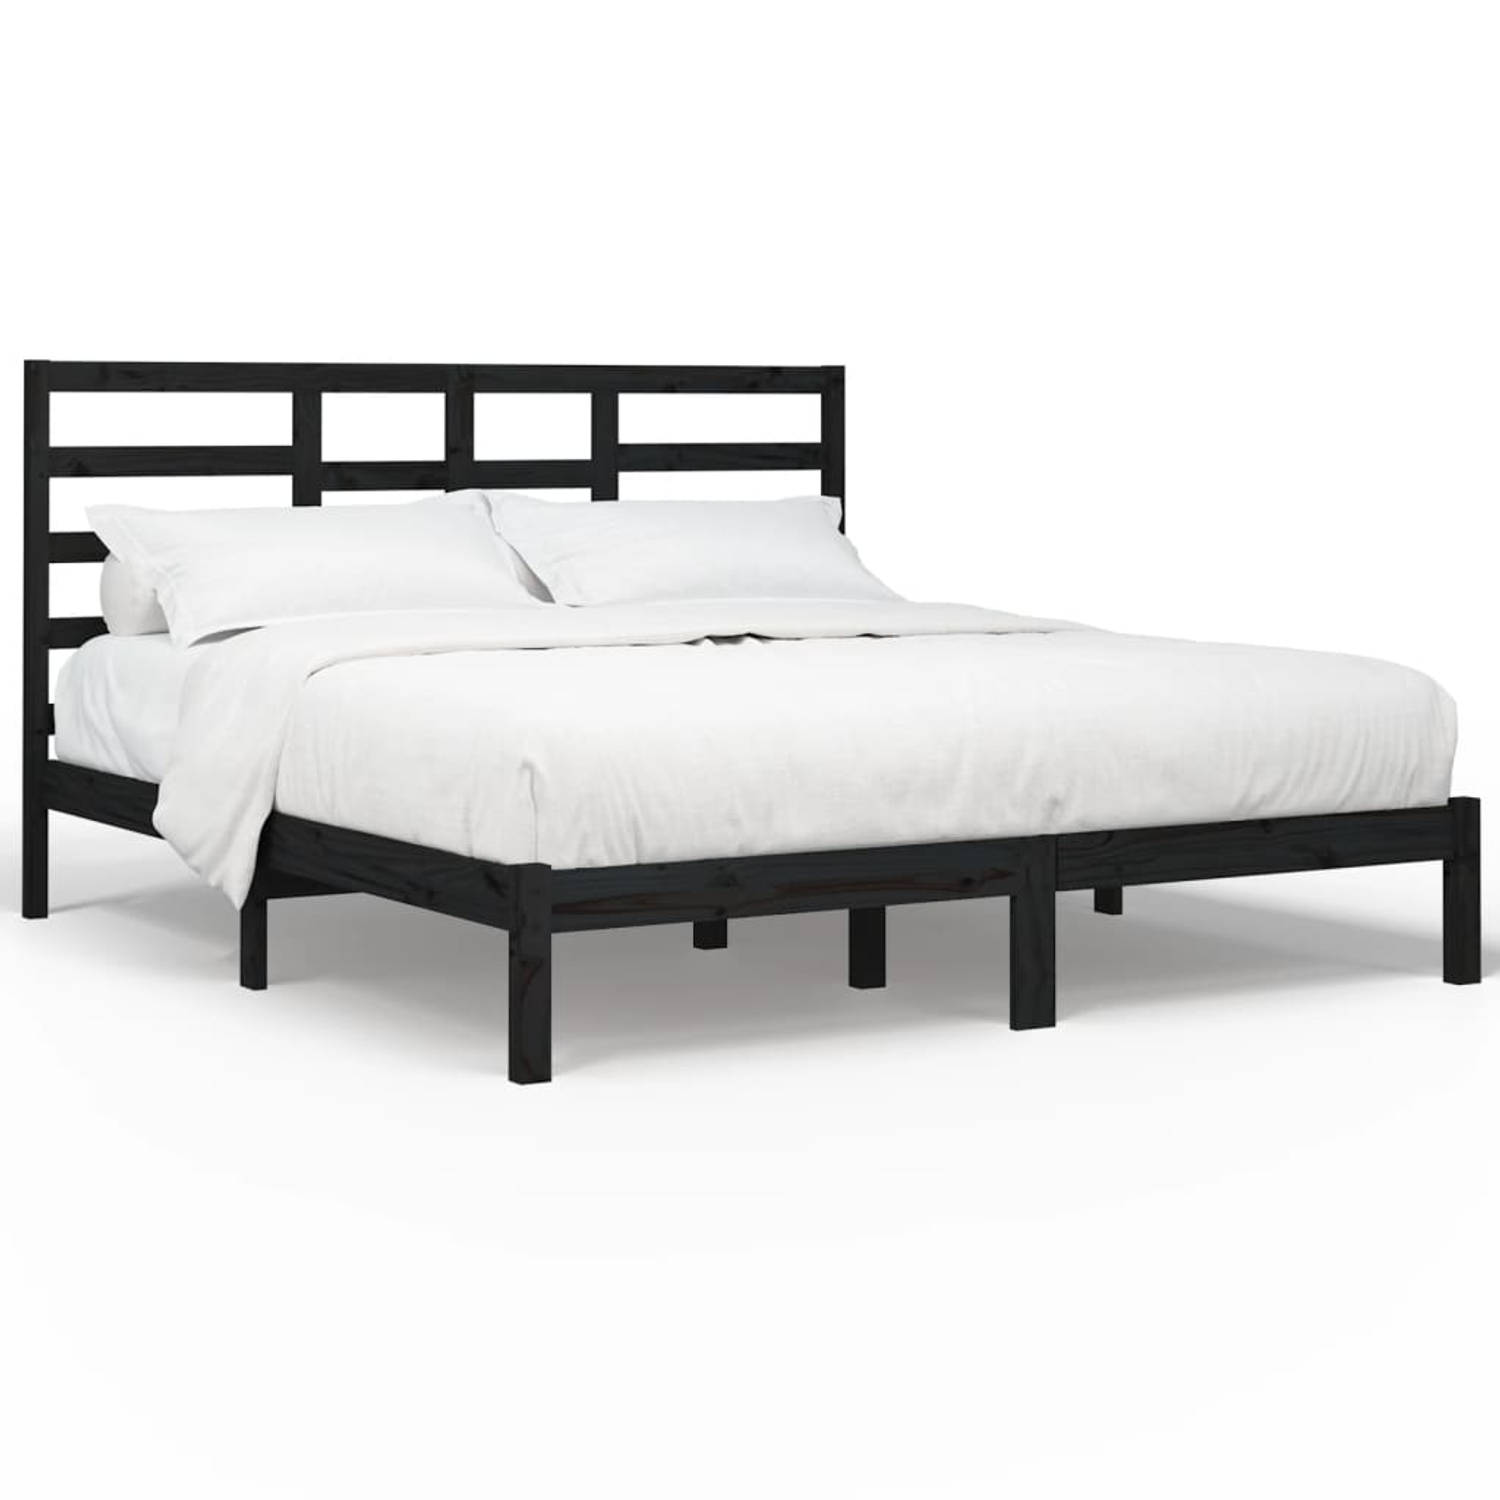 The Living Store Bedframe massief hout zwart 180x200 cm 6FT Super King - Bedframe - Bedframes - Bed - Bedbodem - Ledikant - Bed Frame - Massief Houten Bedframe - Slaapmeubel - Twee